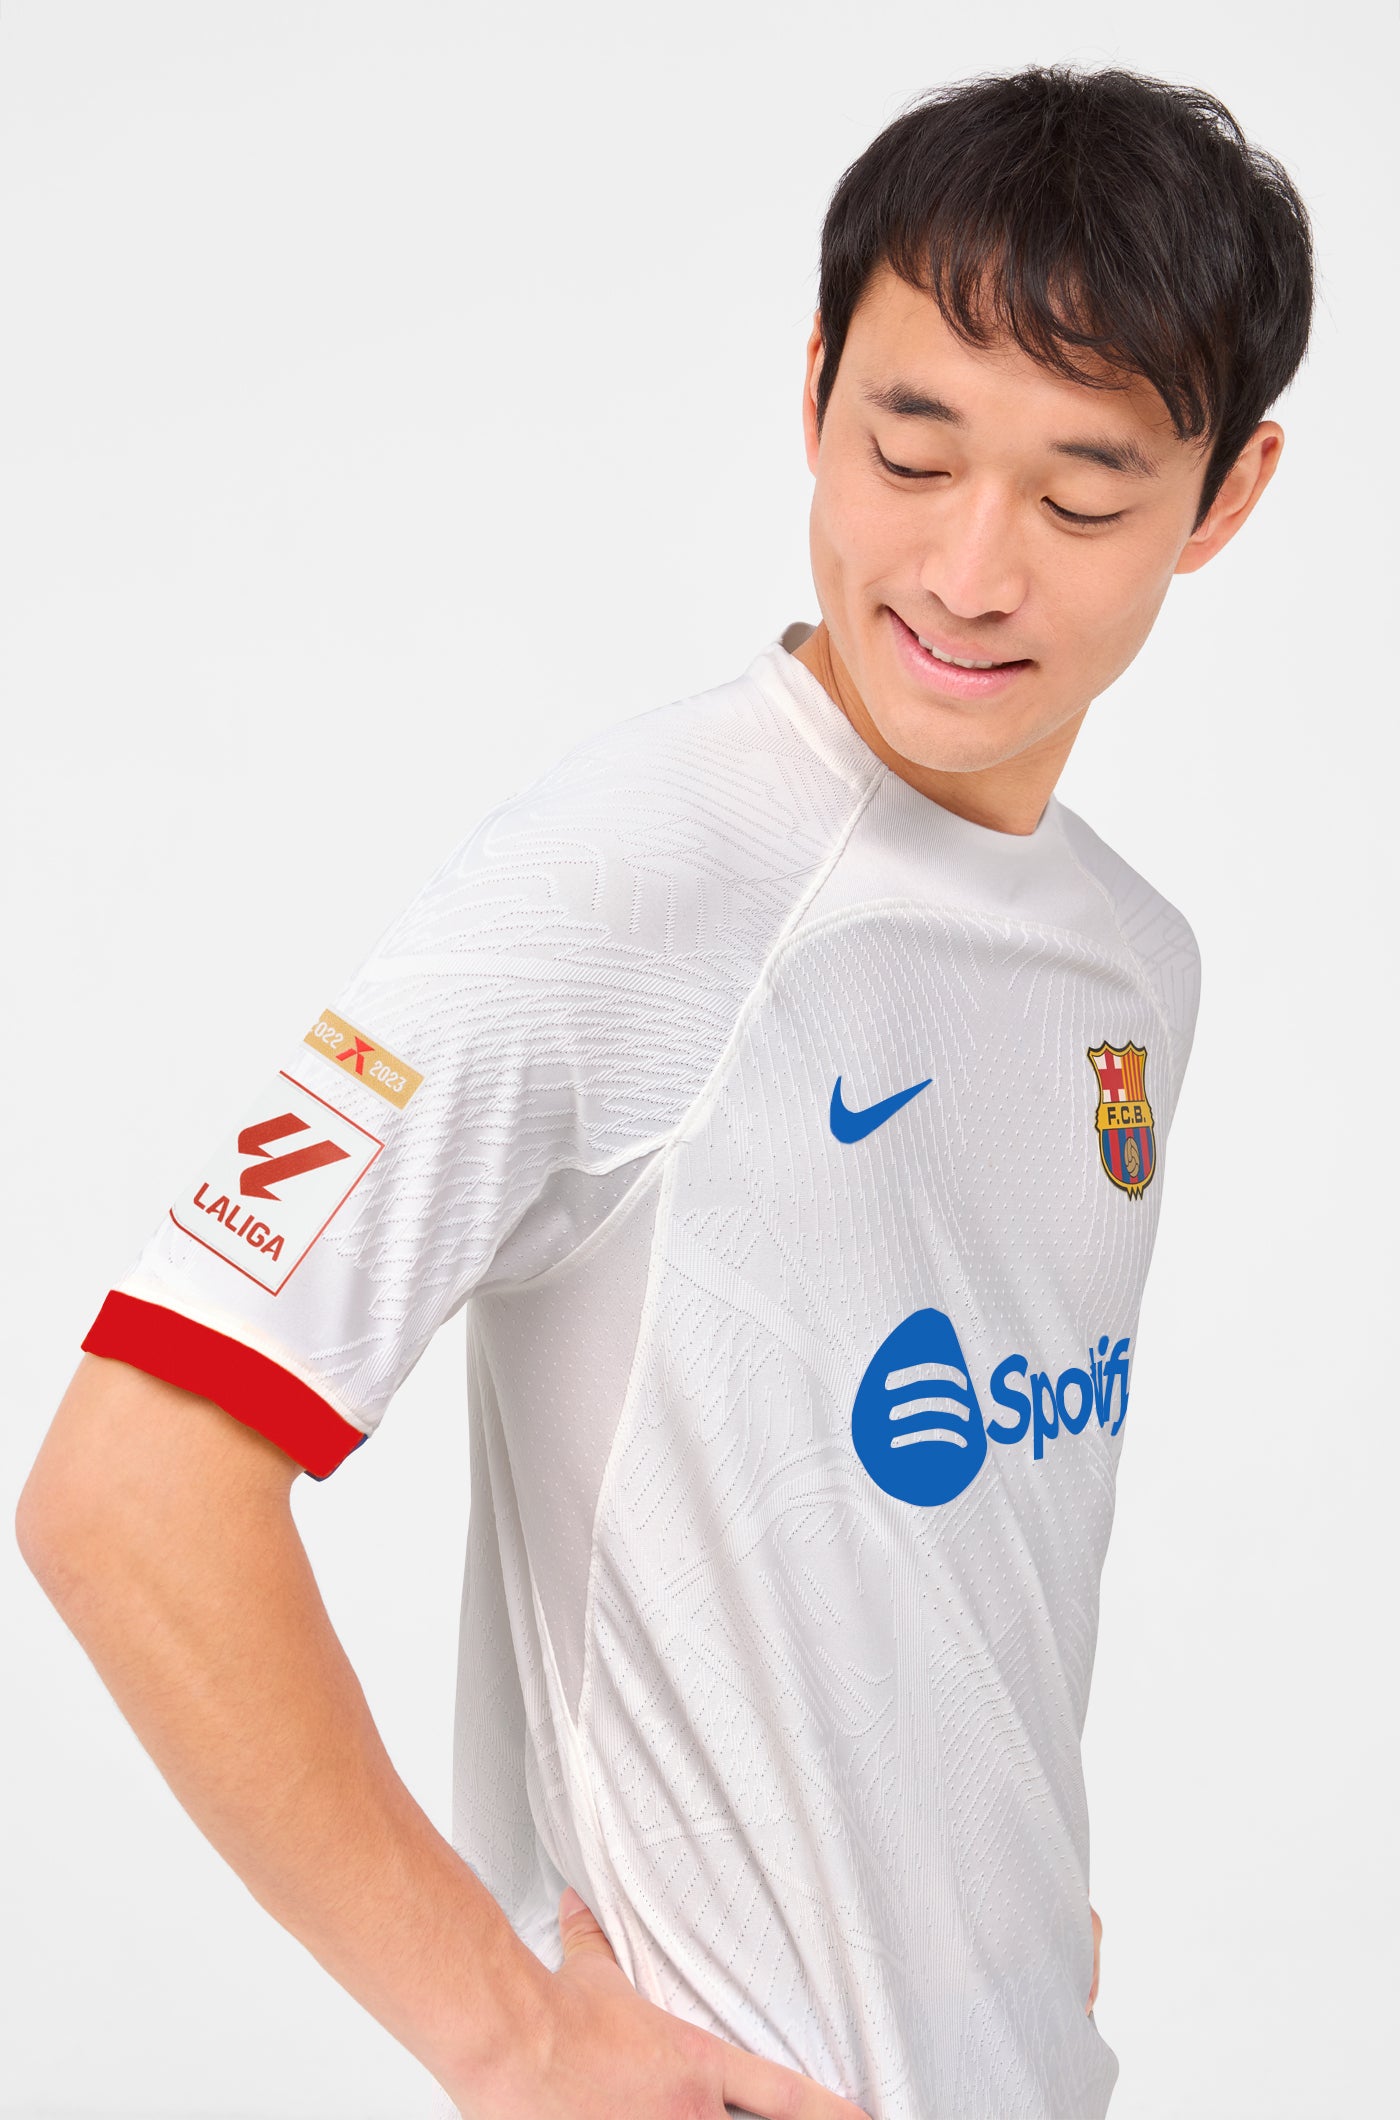 FC Barcelona away match shirt 23/24 – Barça Official Store Spotify